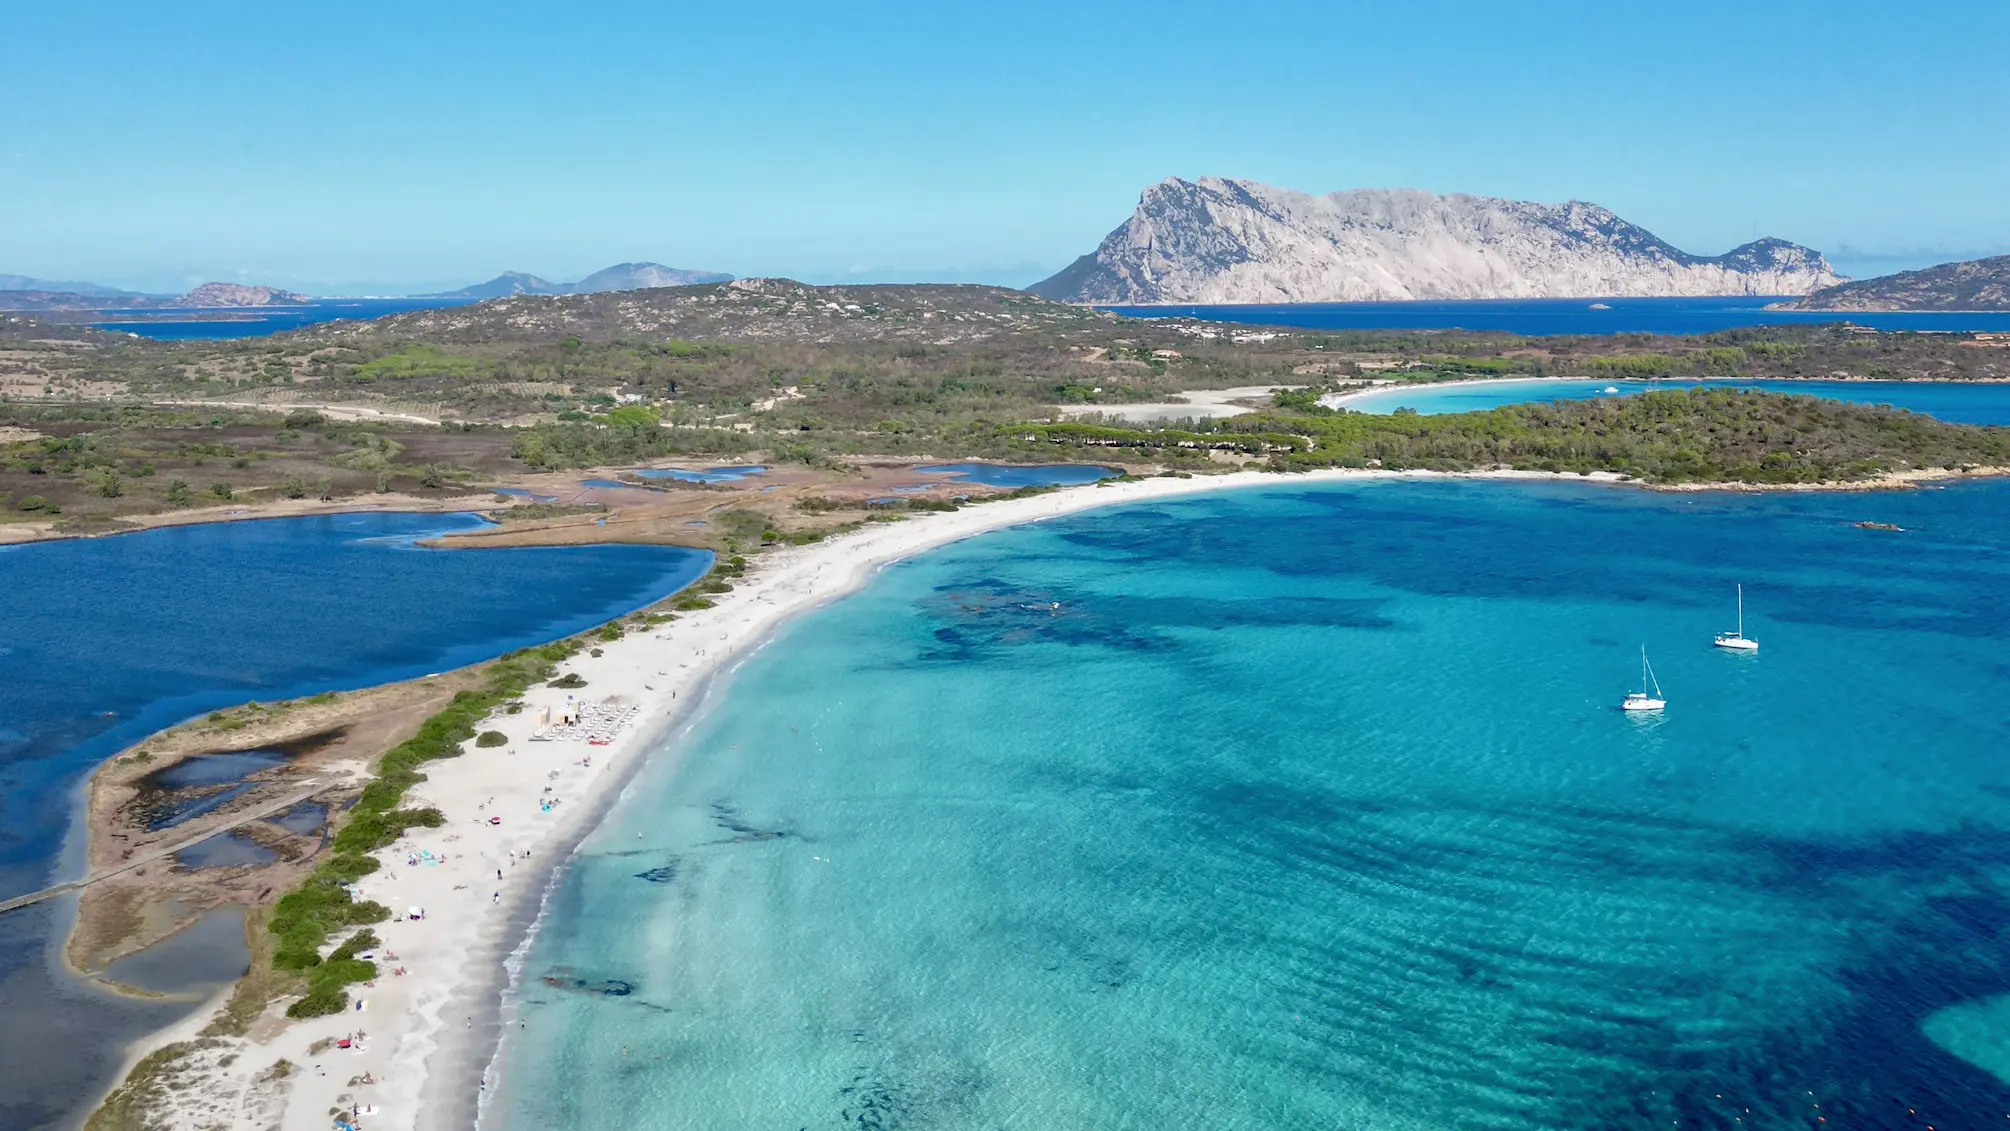 Sardinien: Die Karibik Europas